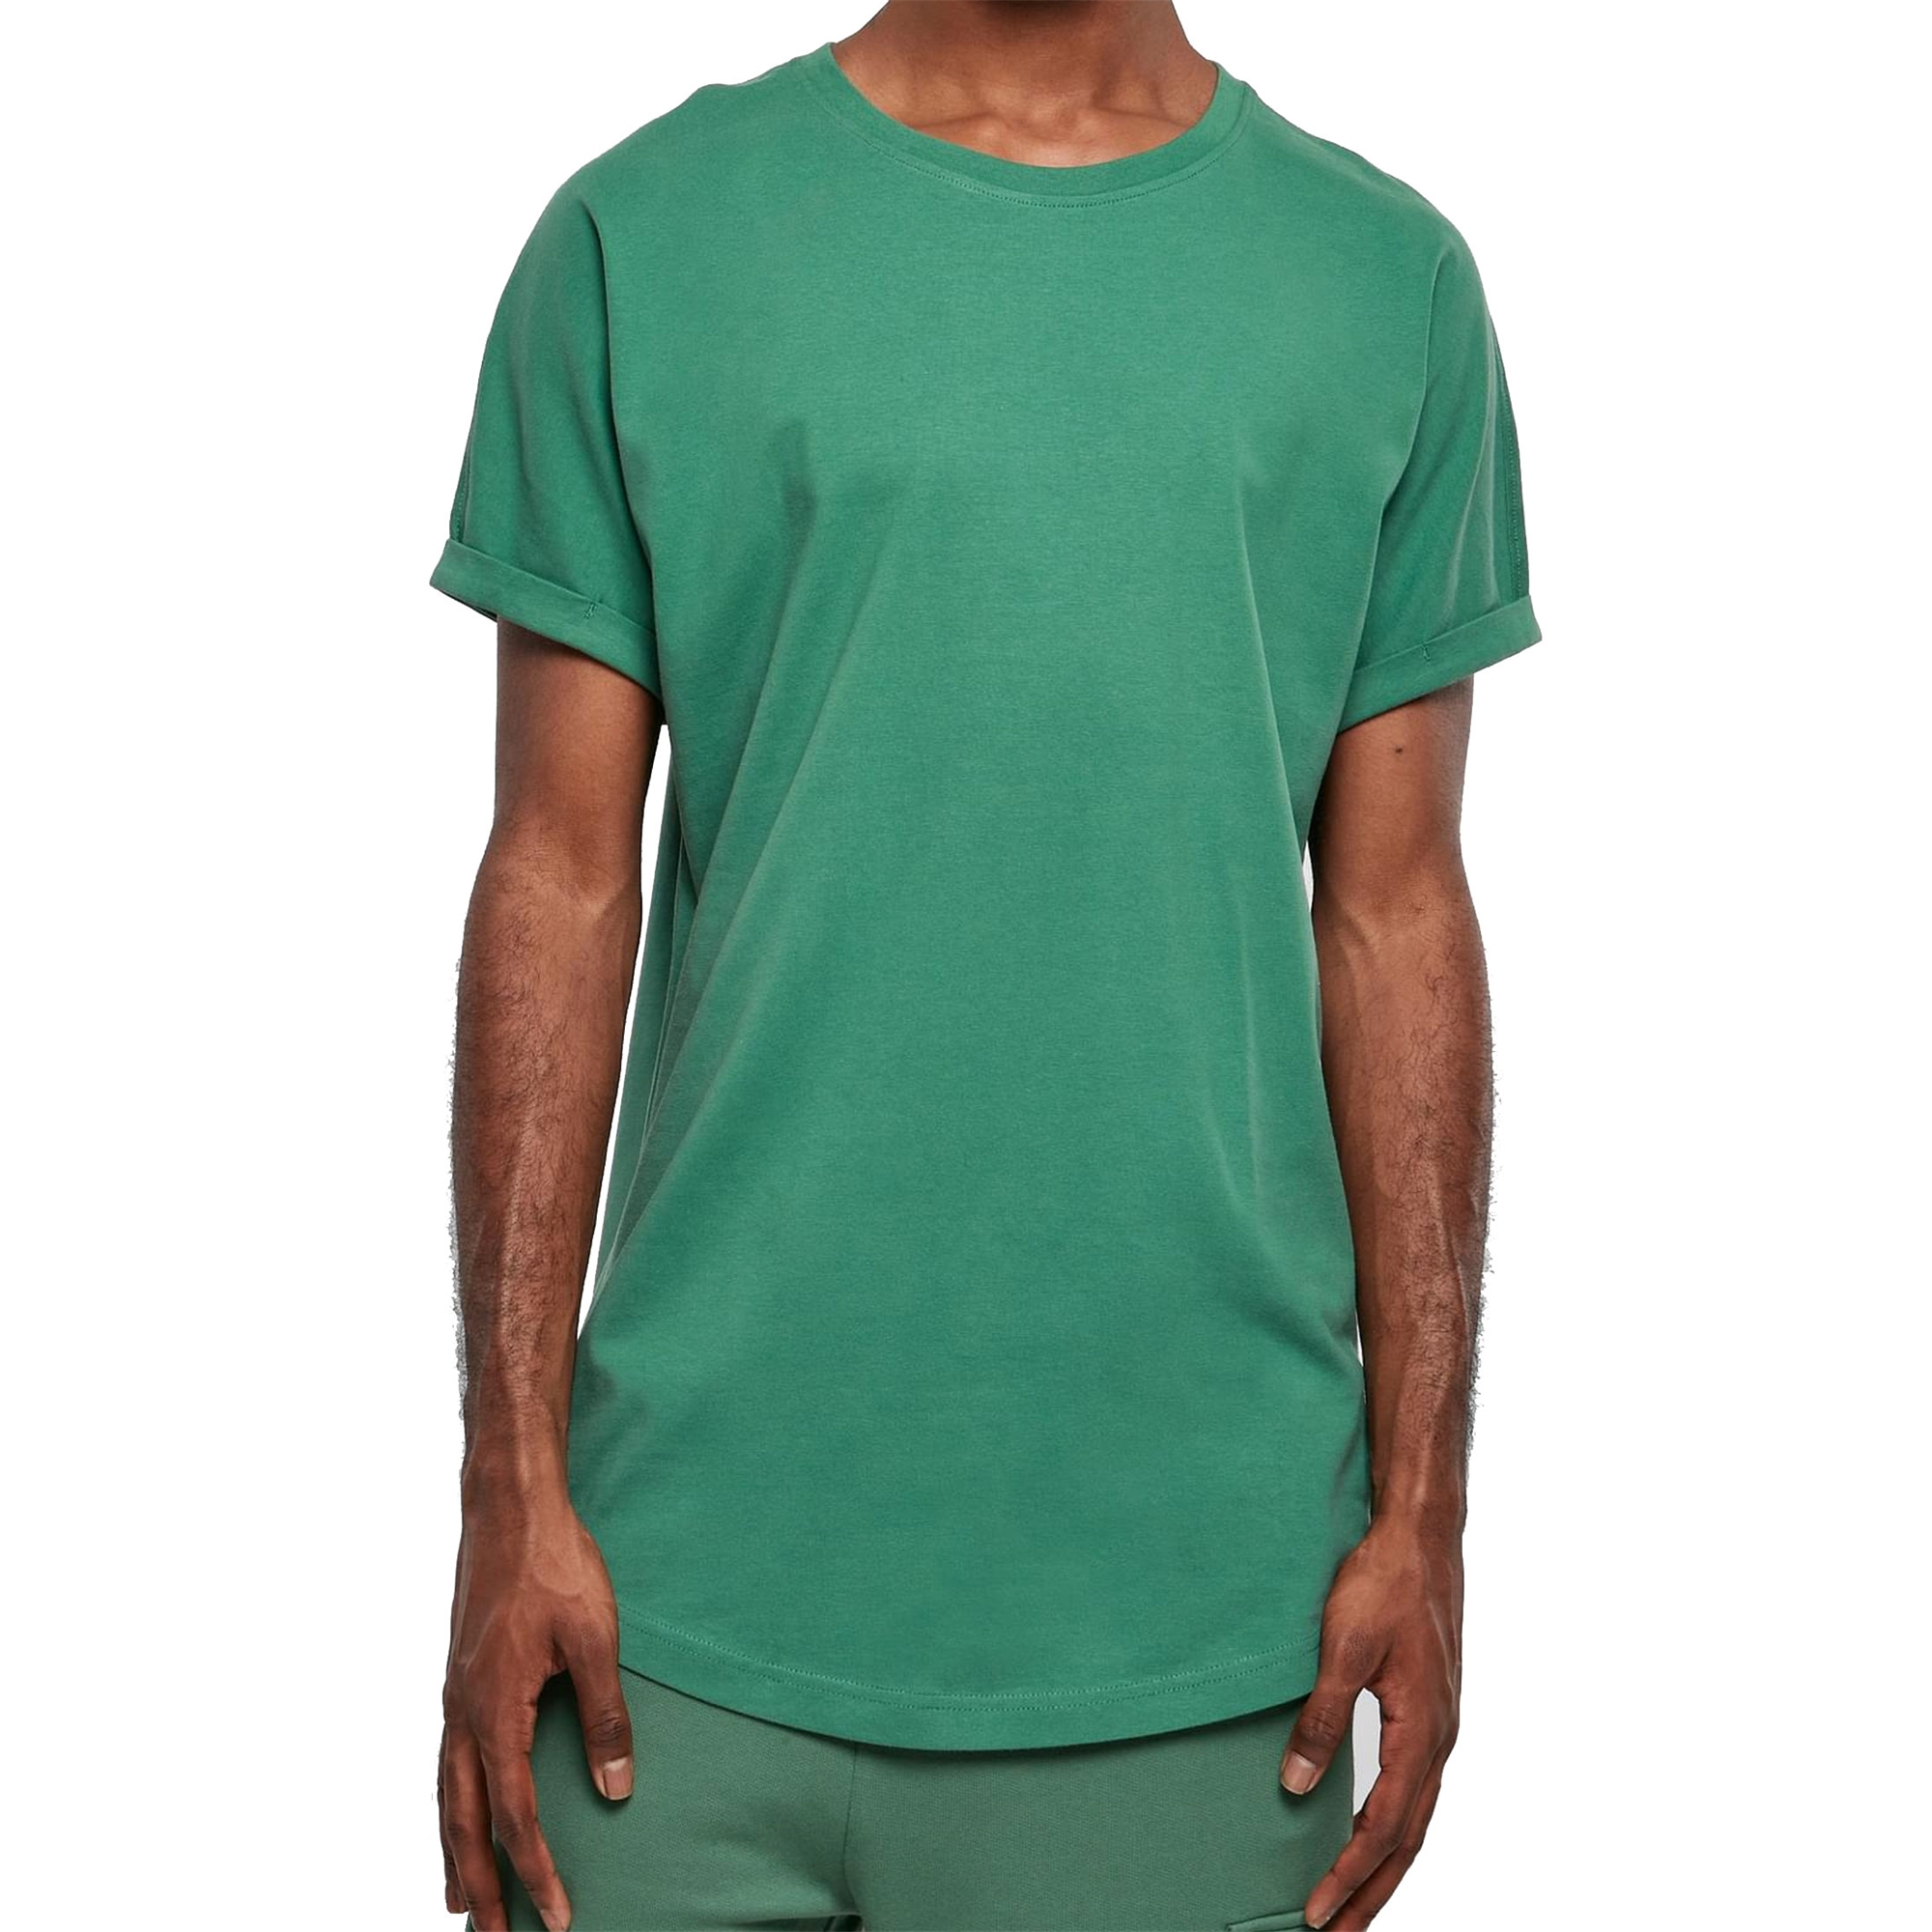 Urban Classics Herren T-Shirt Shaped oversize Shirt Long Turnup lang Tee | eBay extra